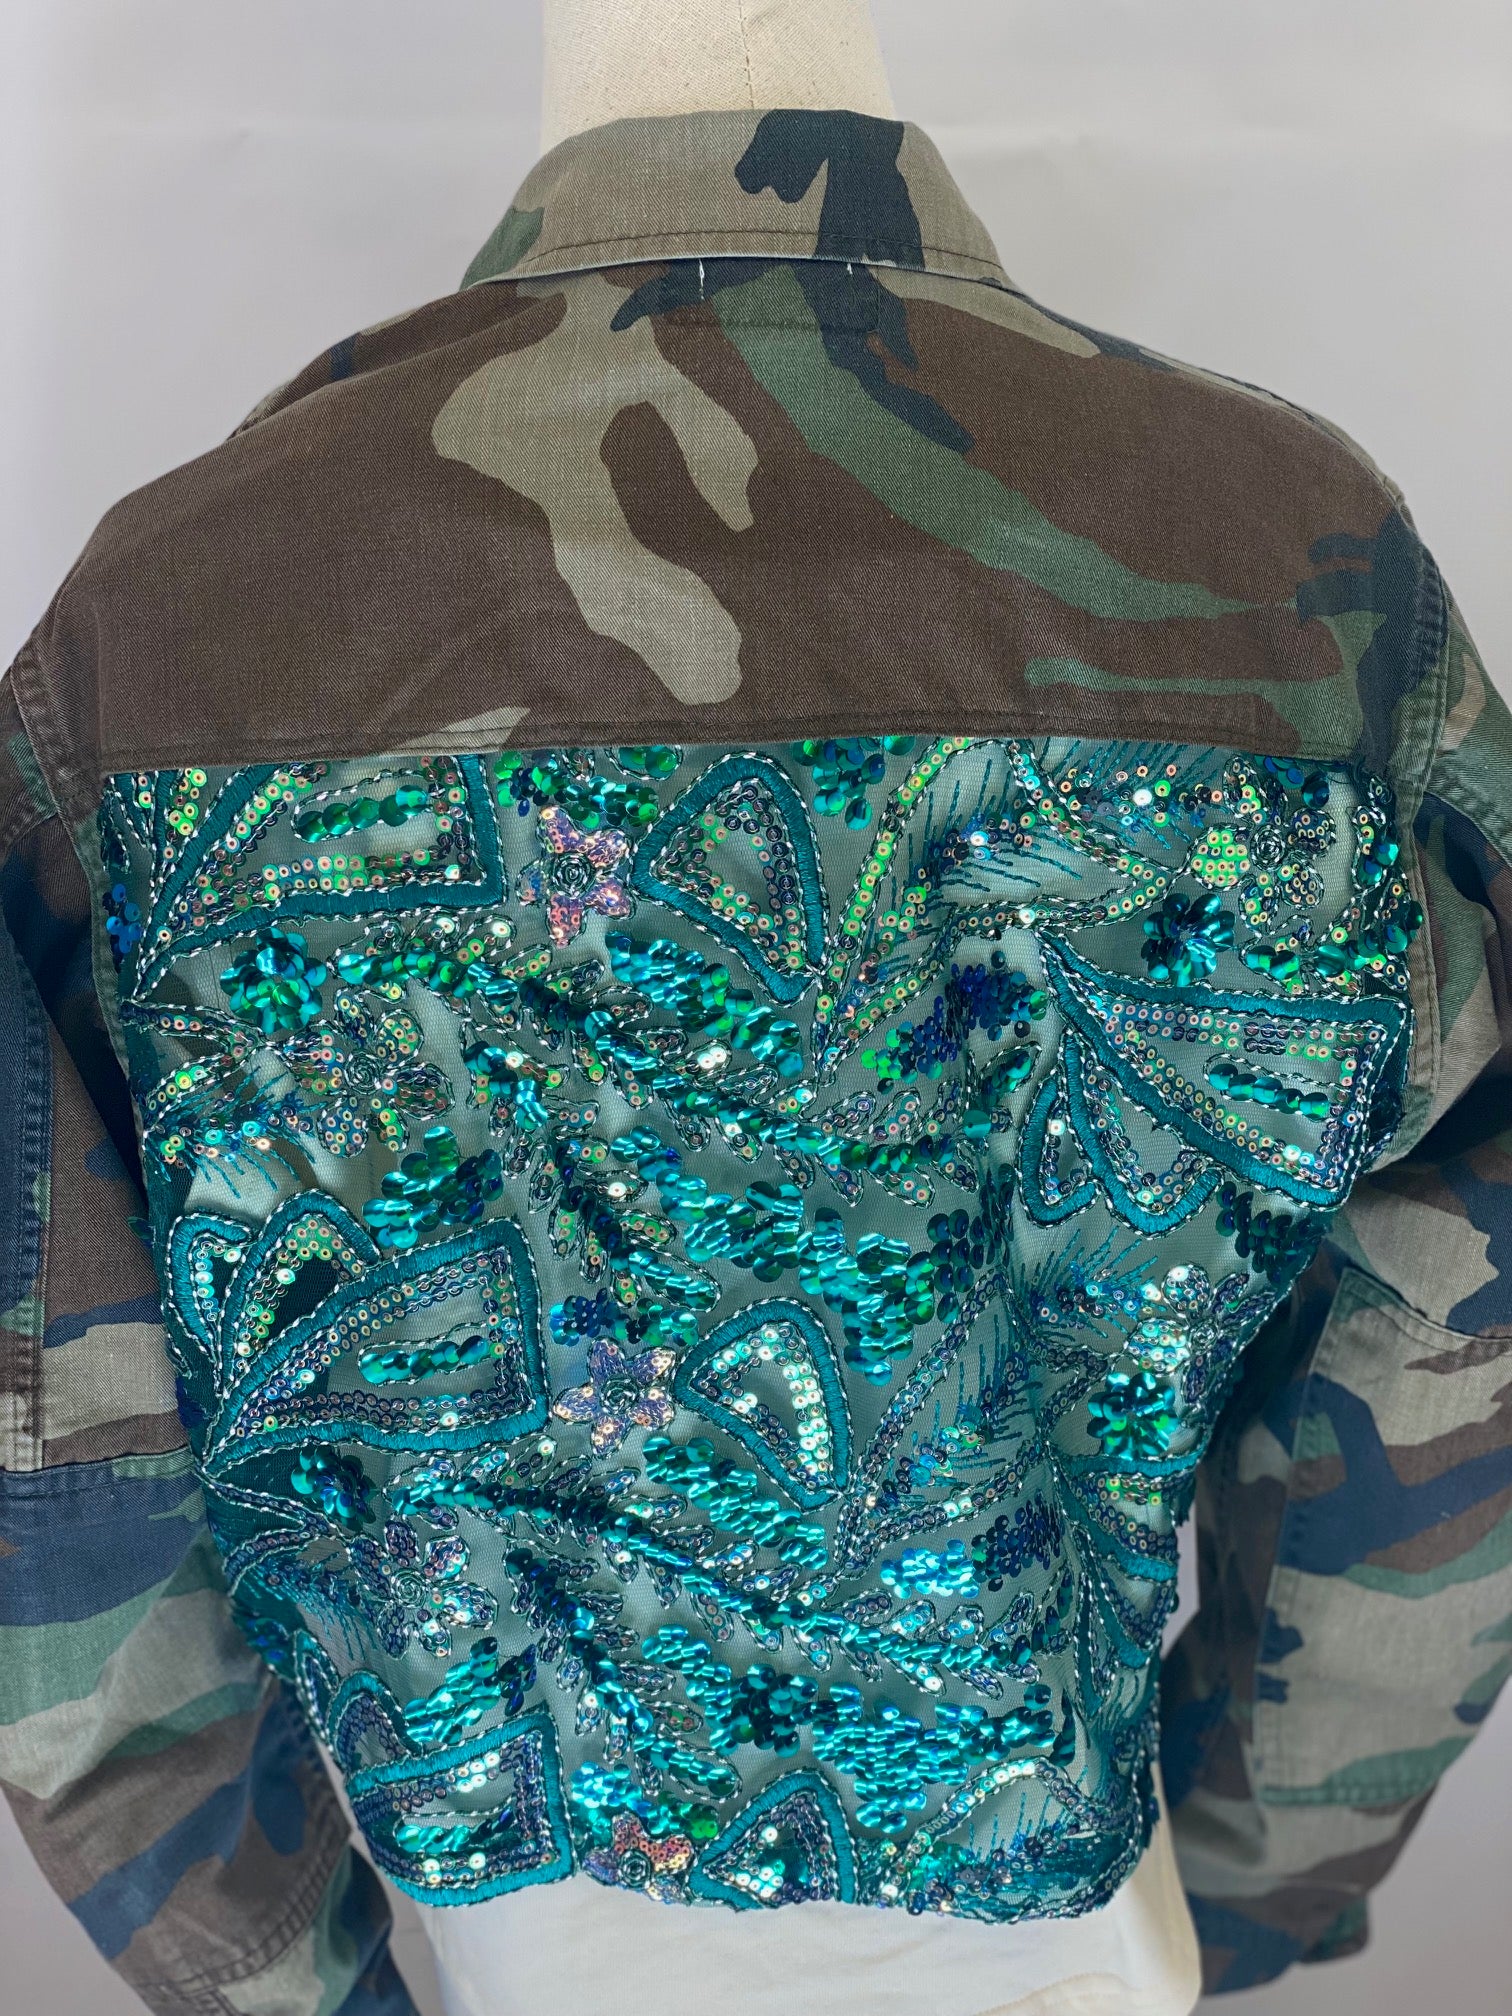 Camo Jacket Refurbished with Teal Sequins